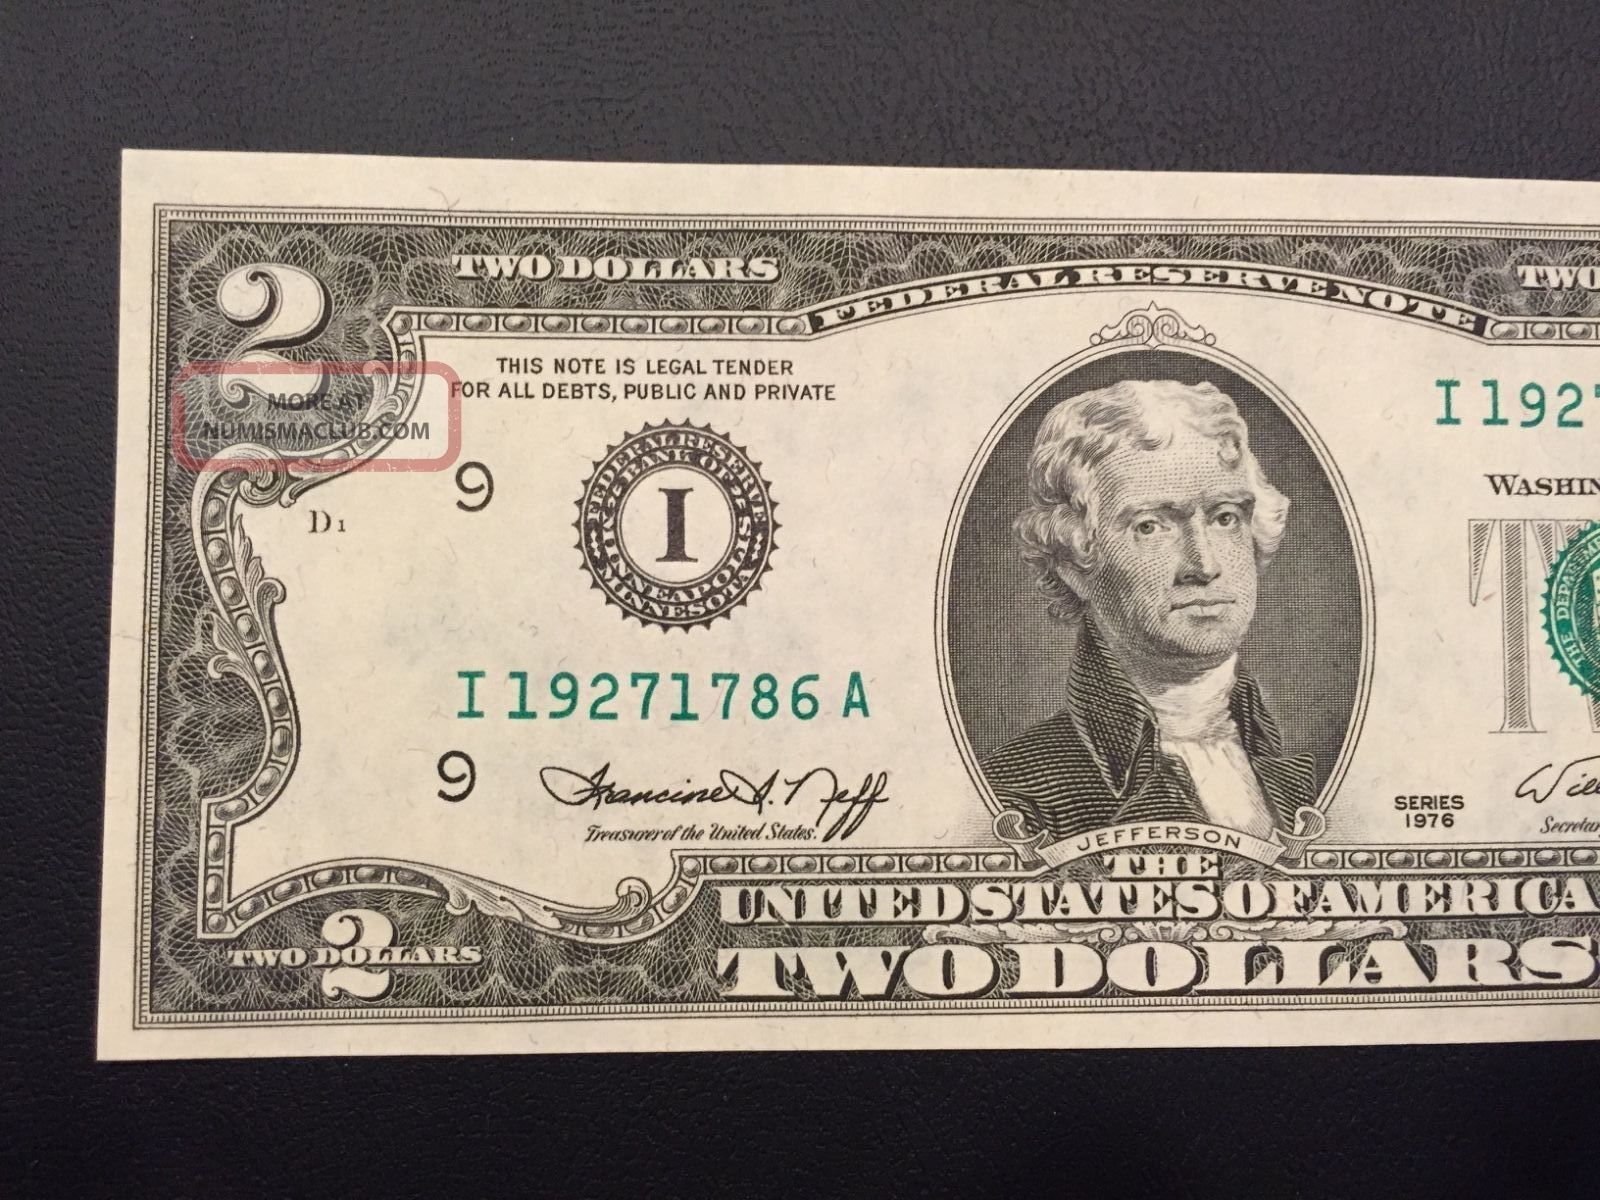 1976 $2 Two Dollar Bills (minneapolis 